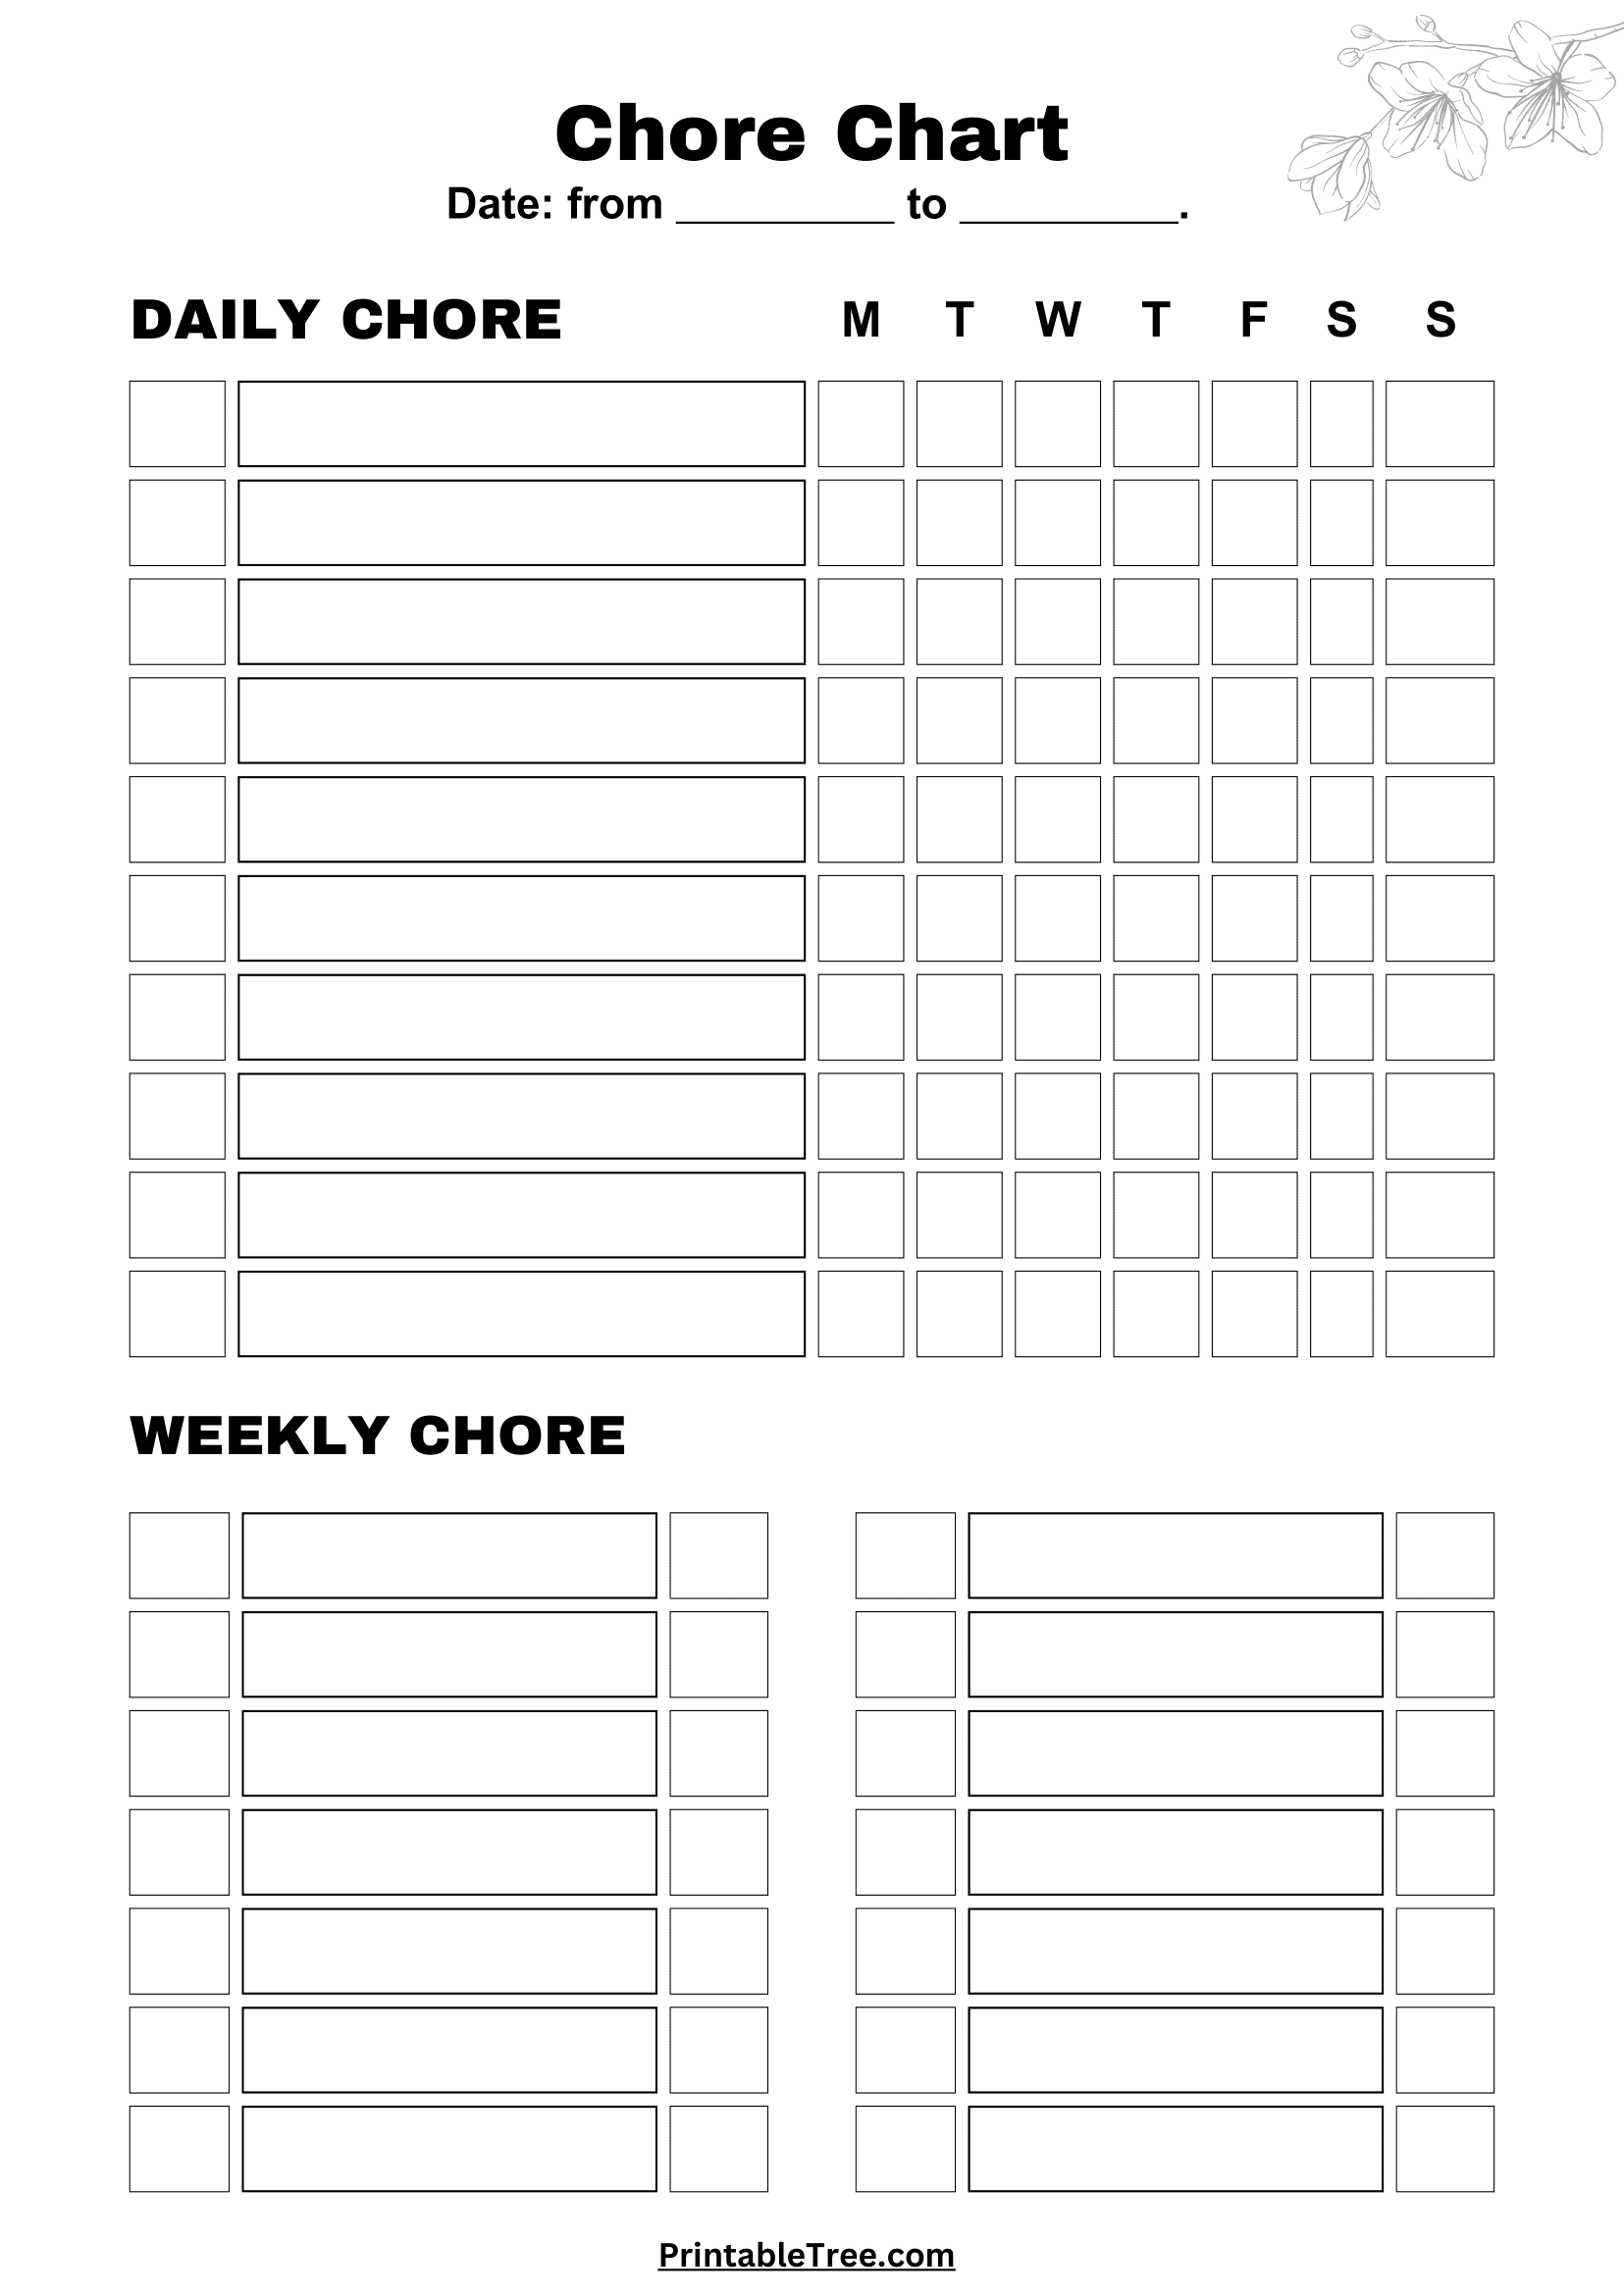 Free Printable Chore Chart PDF Template For Kids - Charts Free Printable